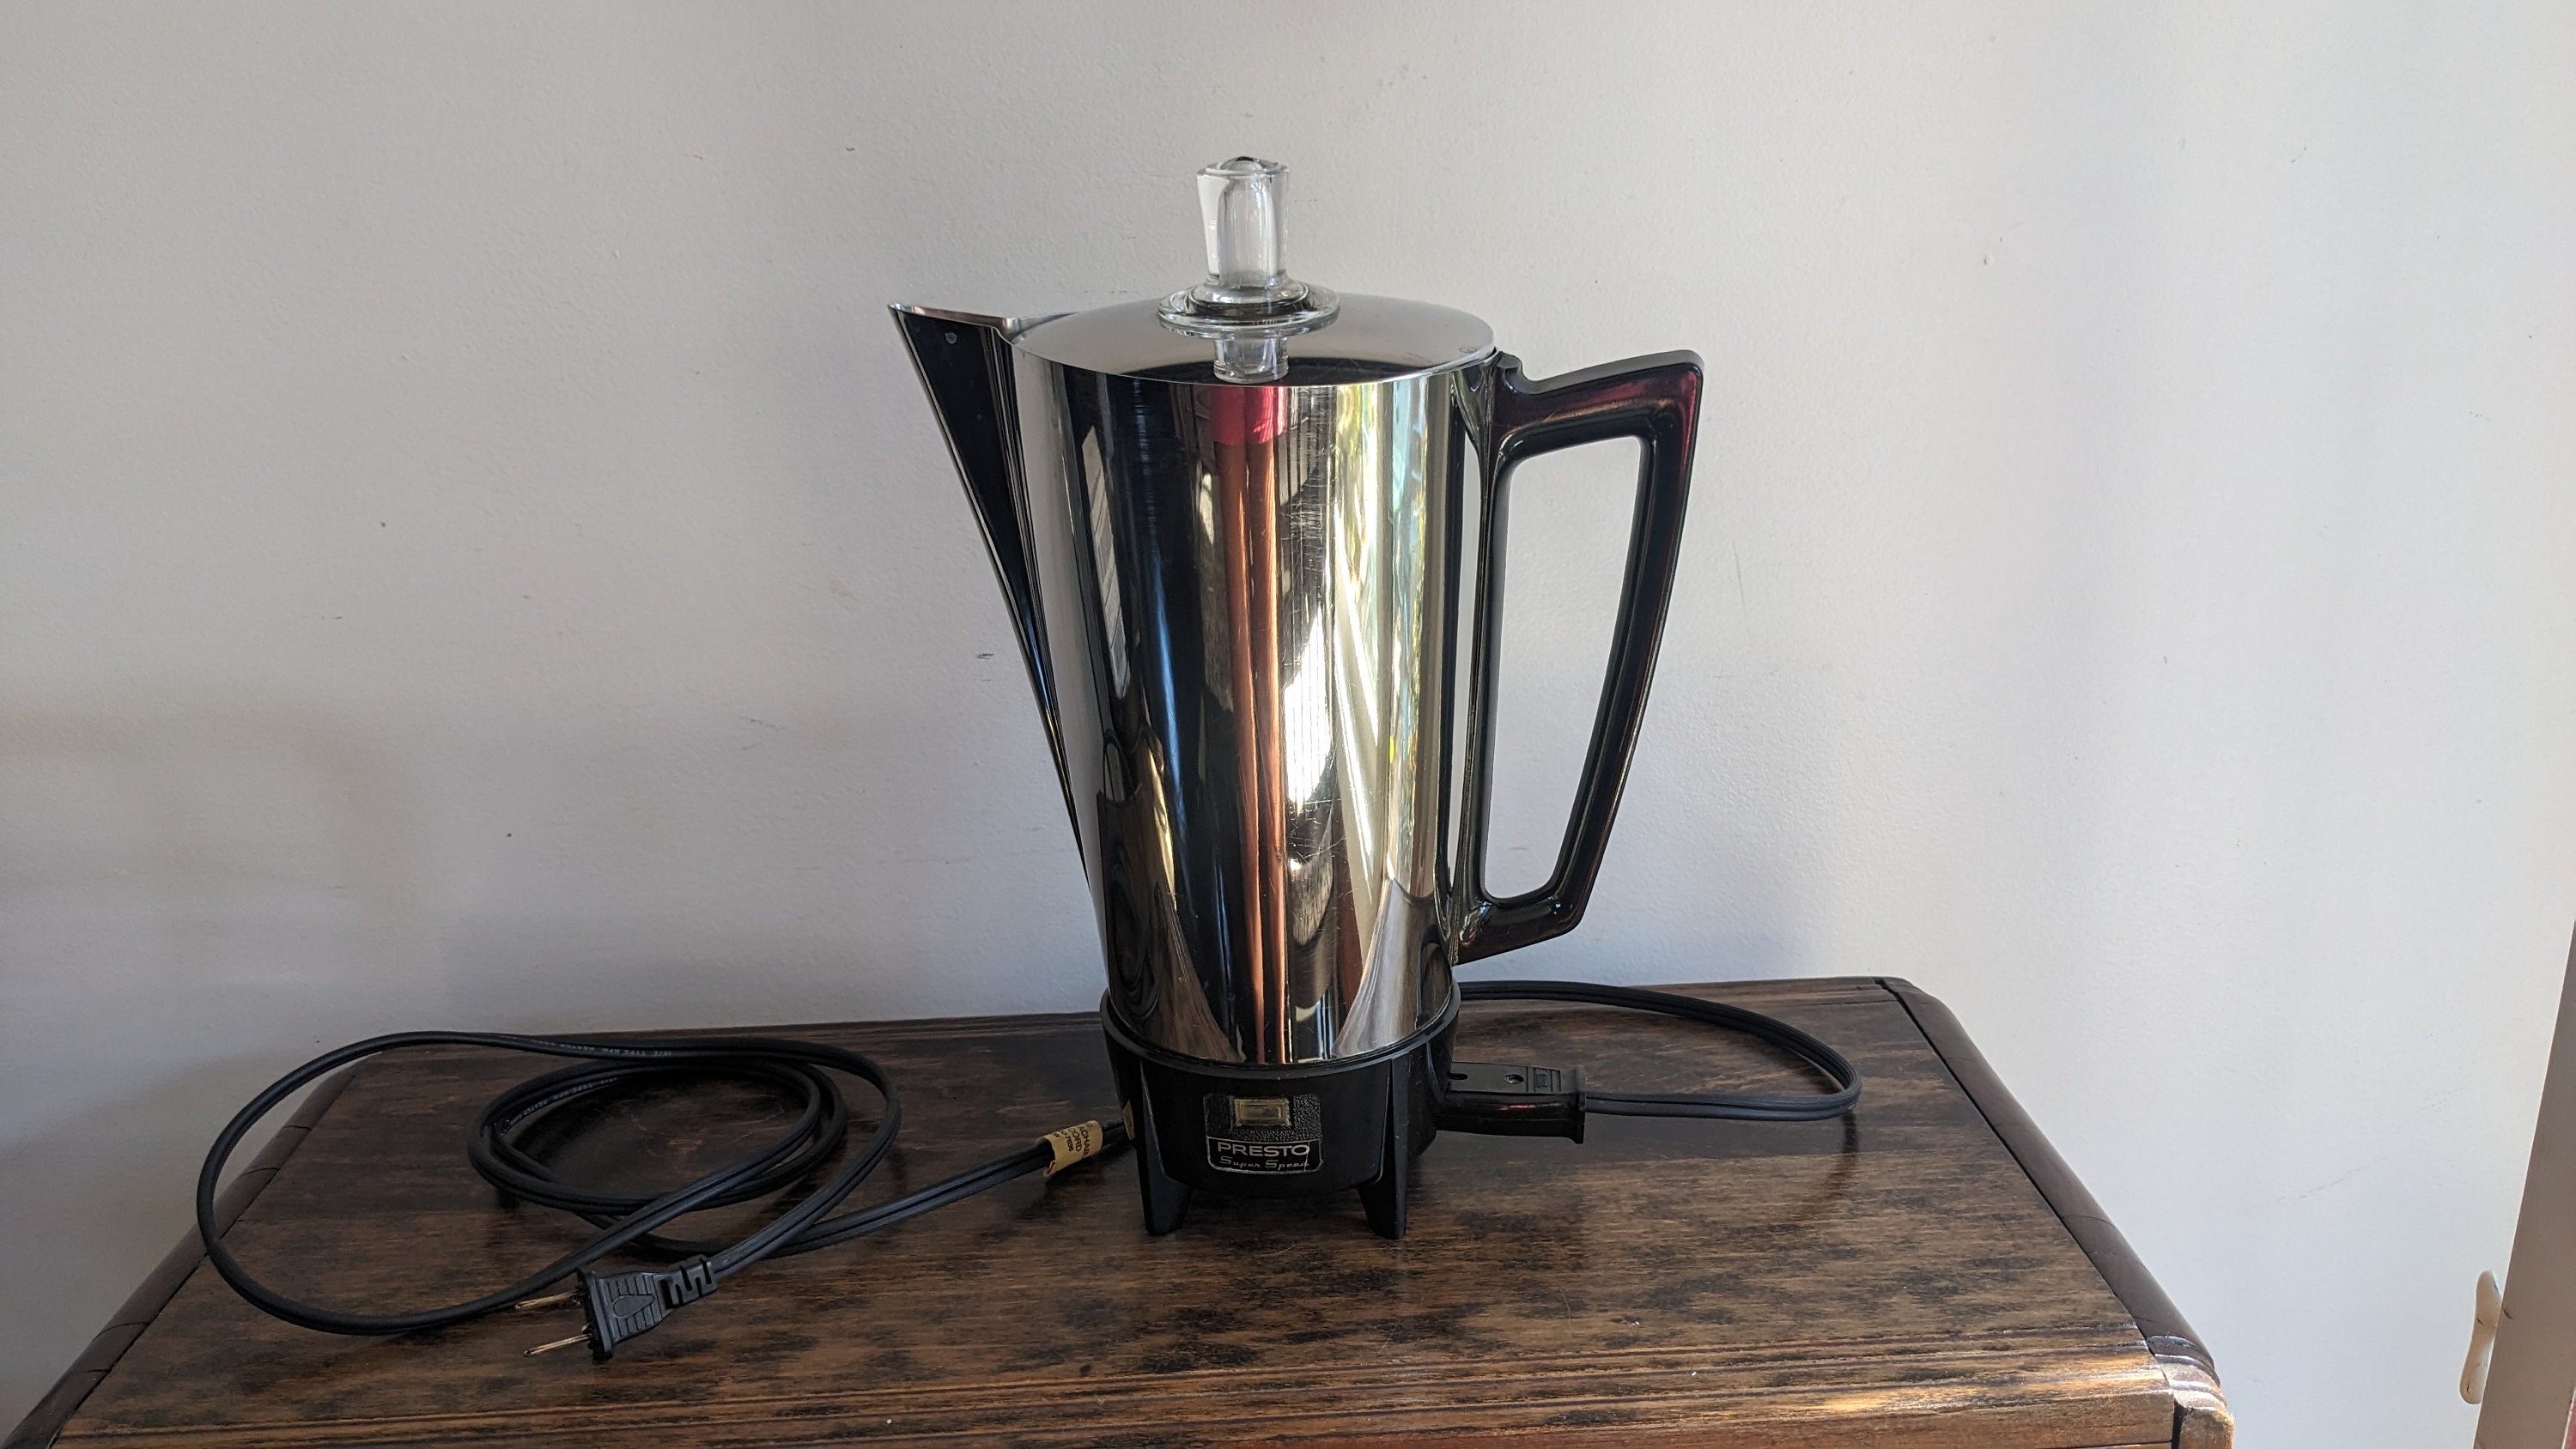 Vintage Presto Stainless Steel 12 Cup Percolator Coffee Pot Model